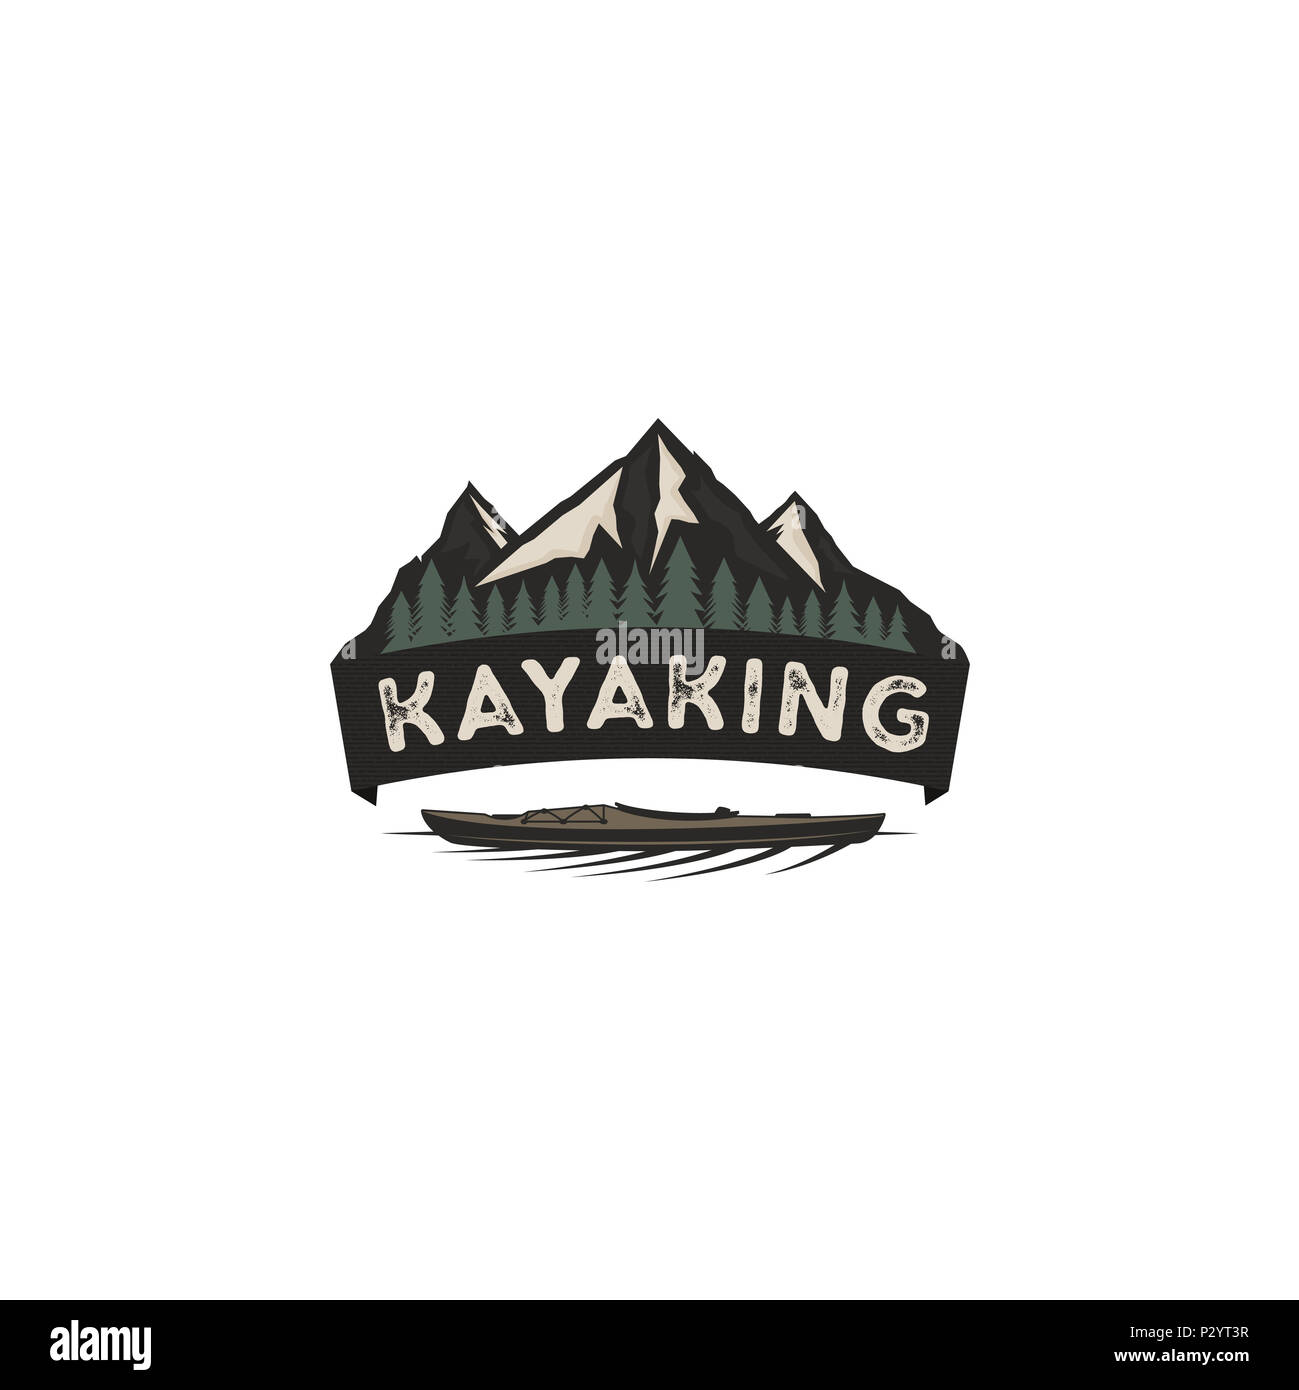 Kayaking vintage badge. Mountain explorer label. Outdoor adventure logo design. Wilderness, forest camping emblem. Outdoor adventure logo template. Stock  Stock Photo